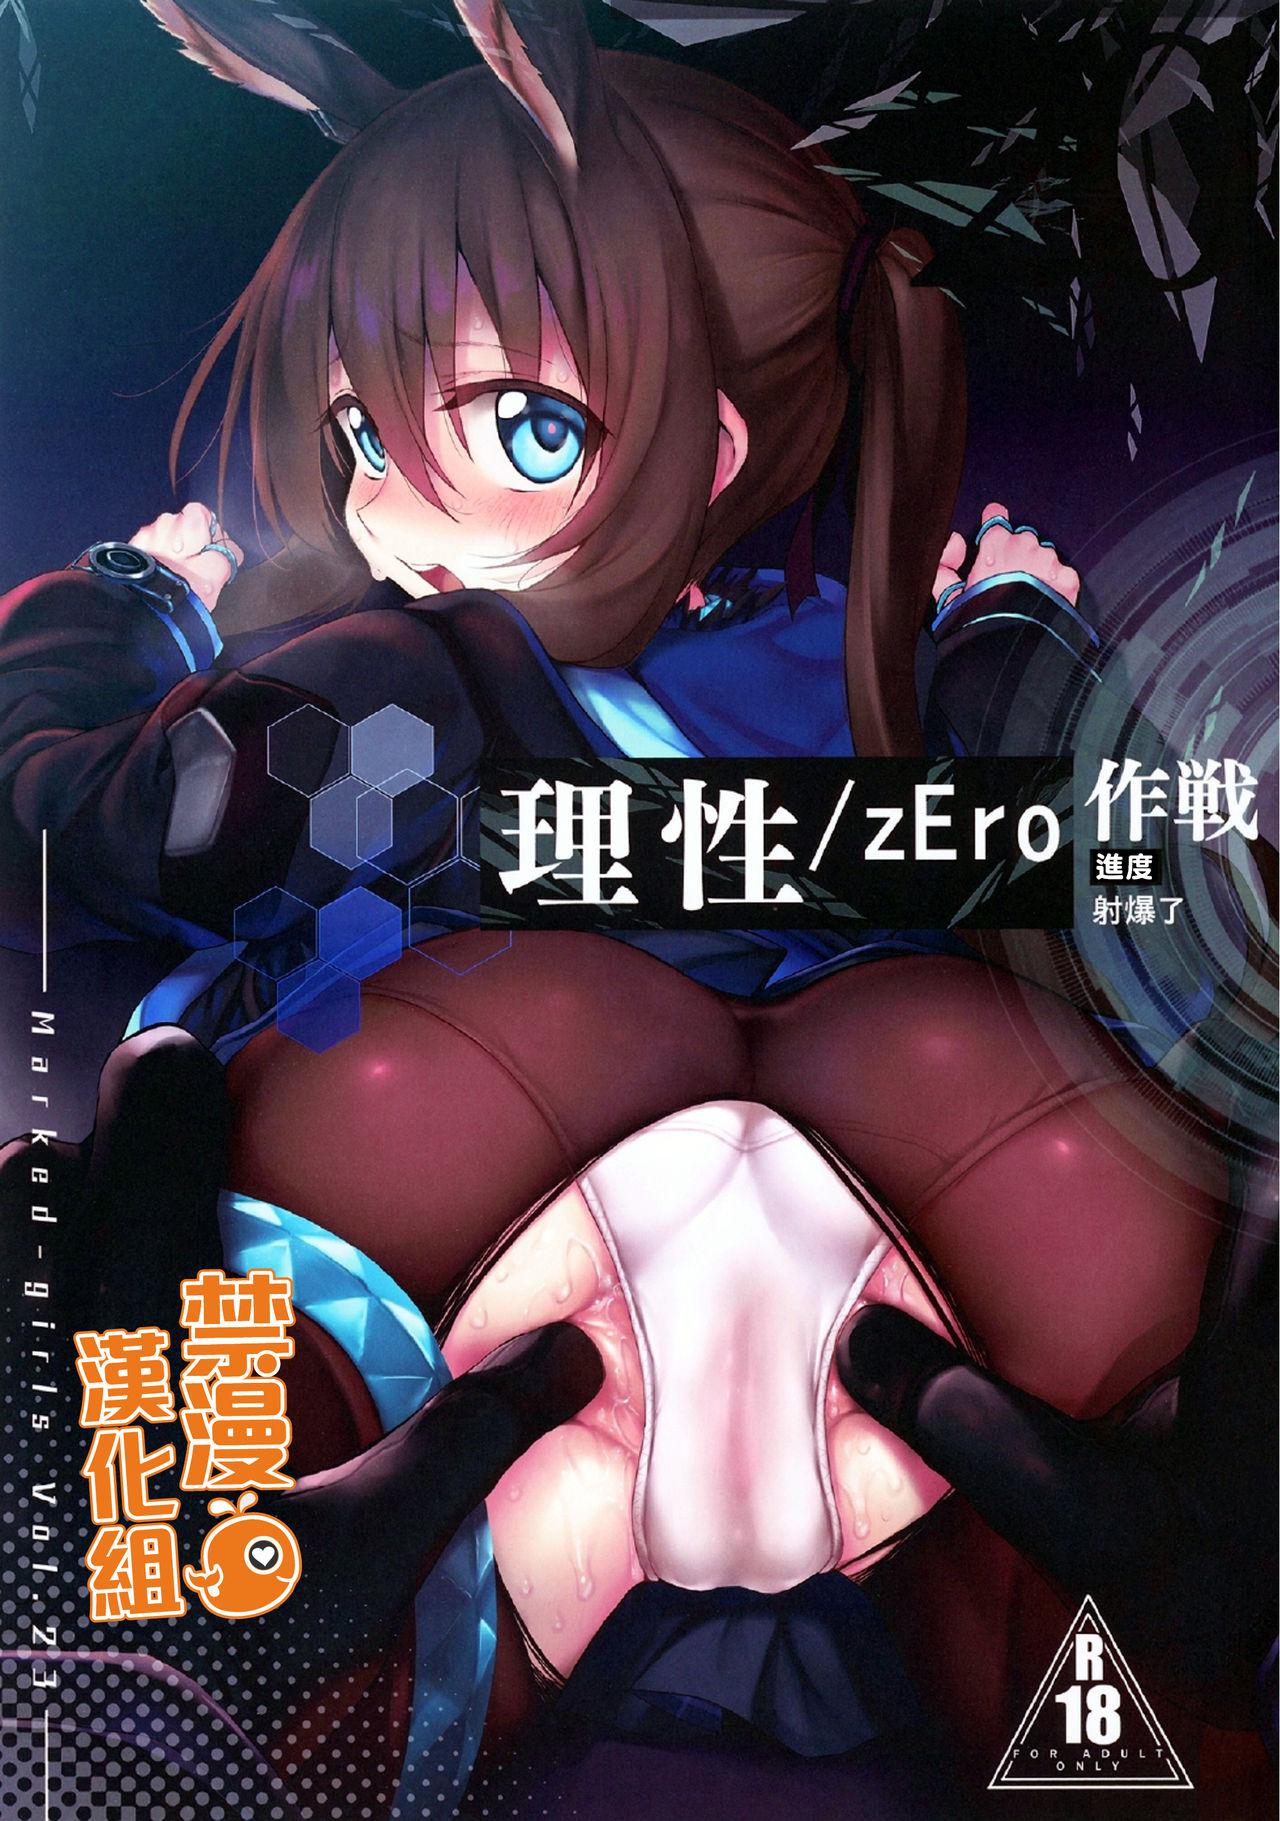 Risei/zEro Marked girls Vol. 23 | 理性/zEro作戰-進度 射爆了 0